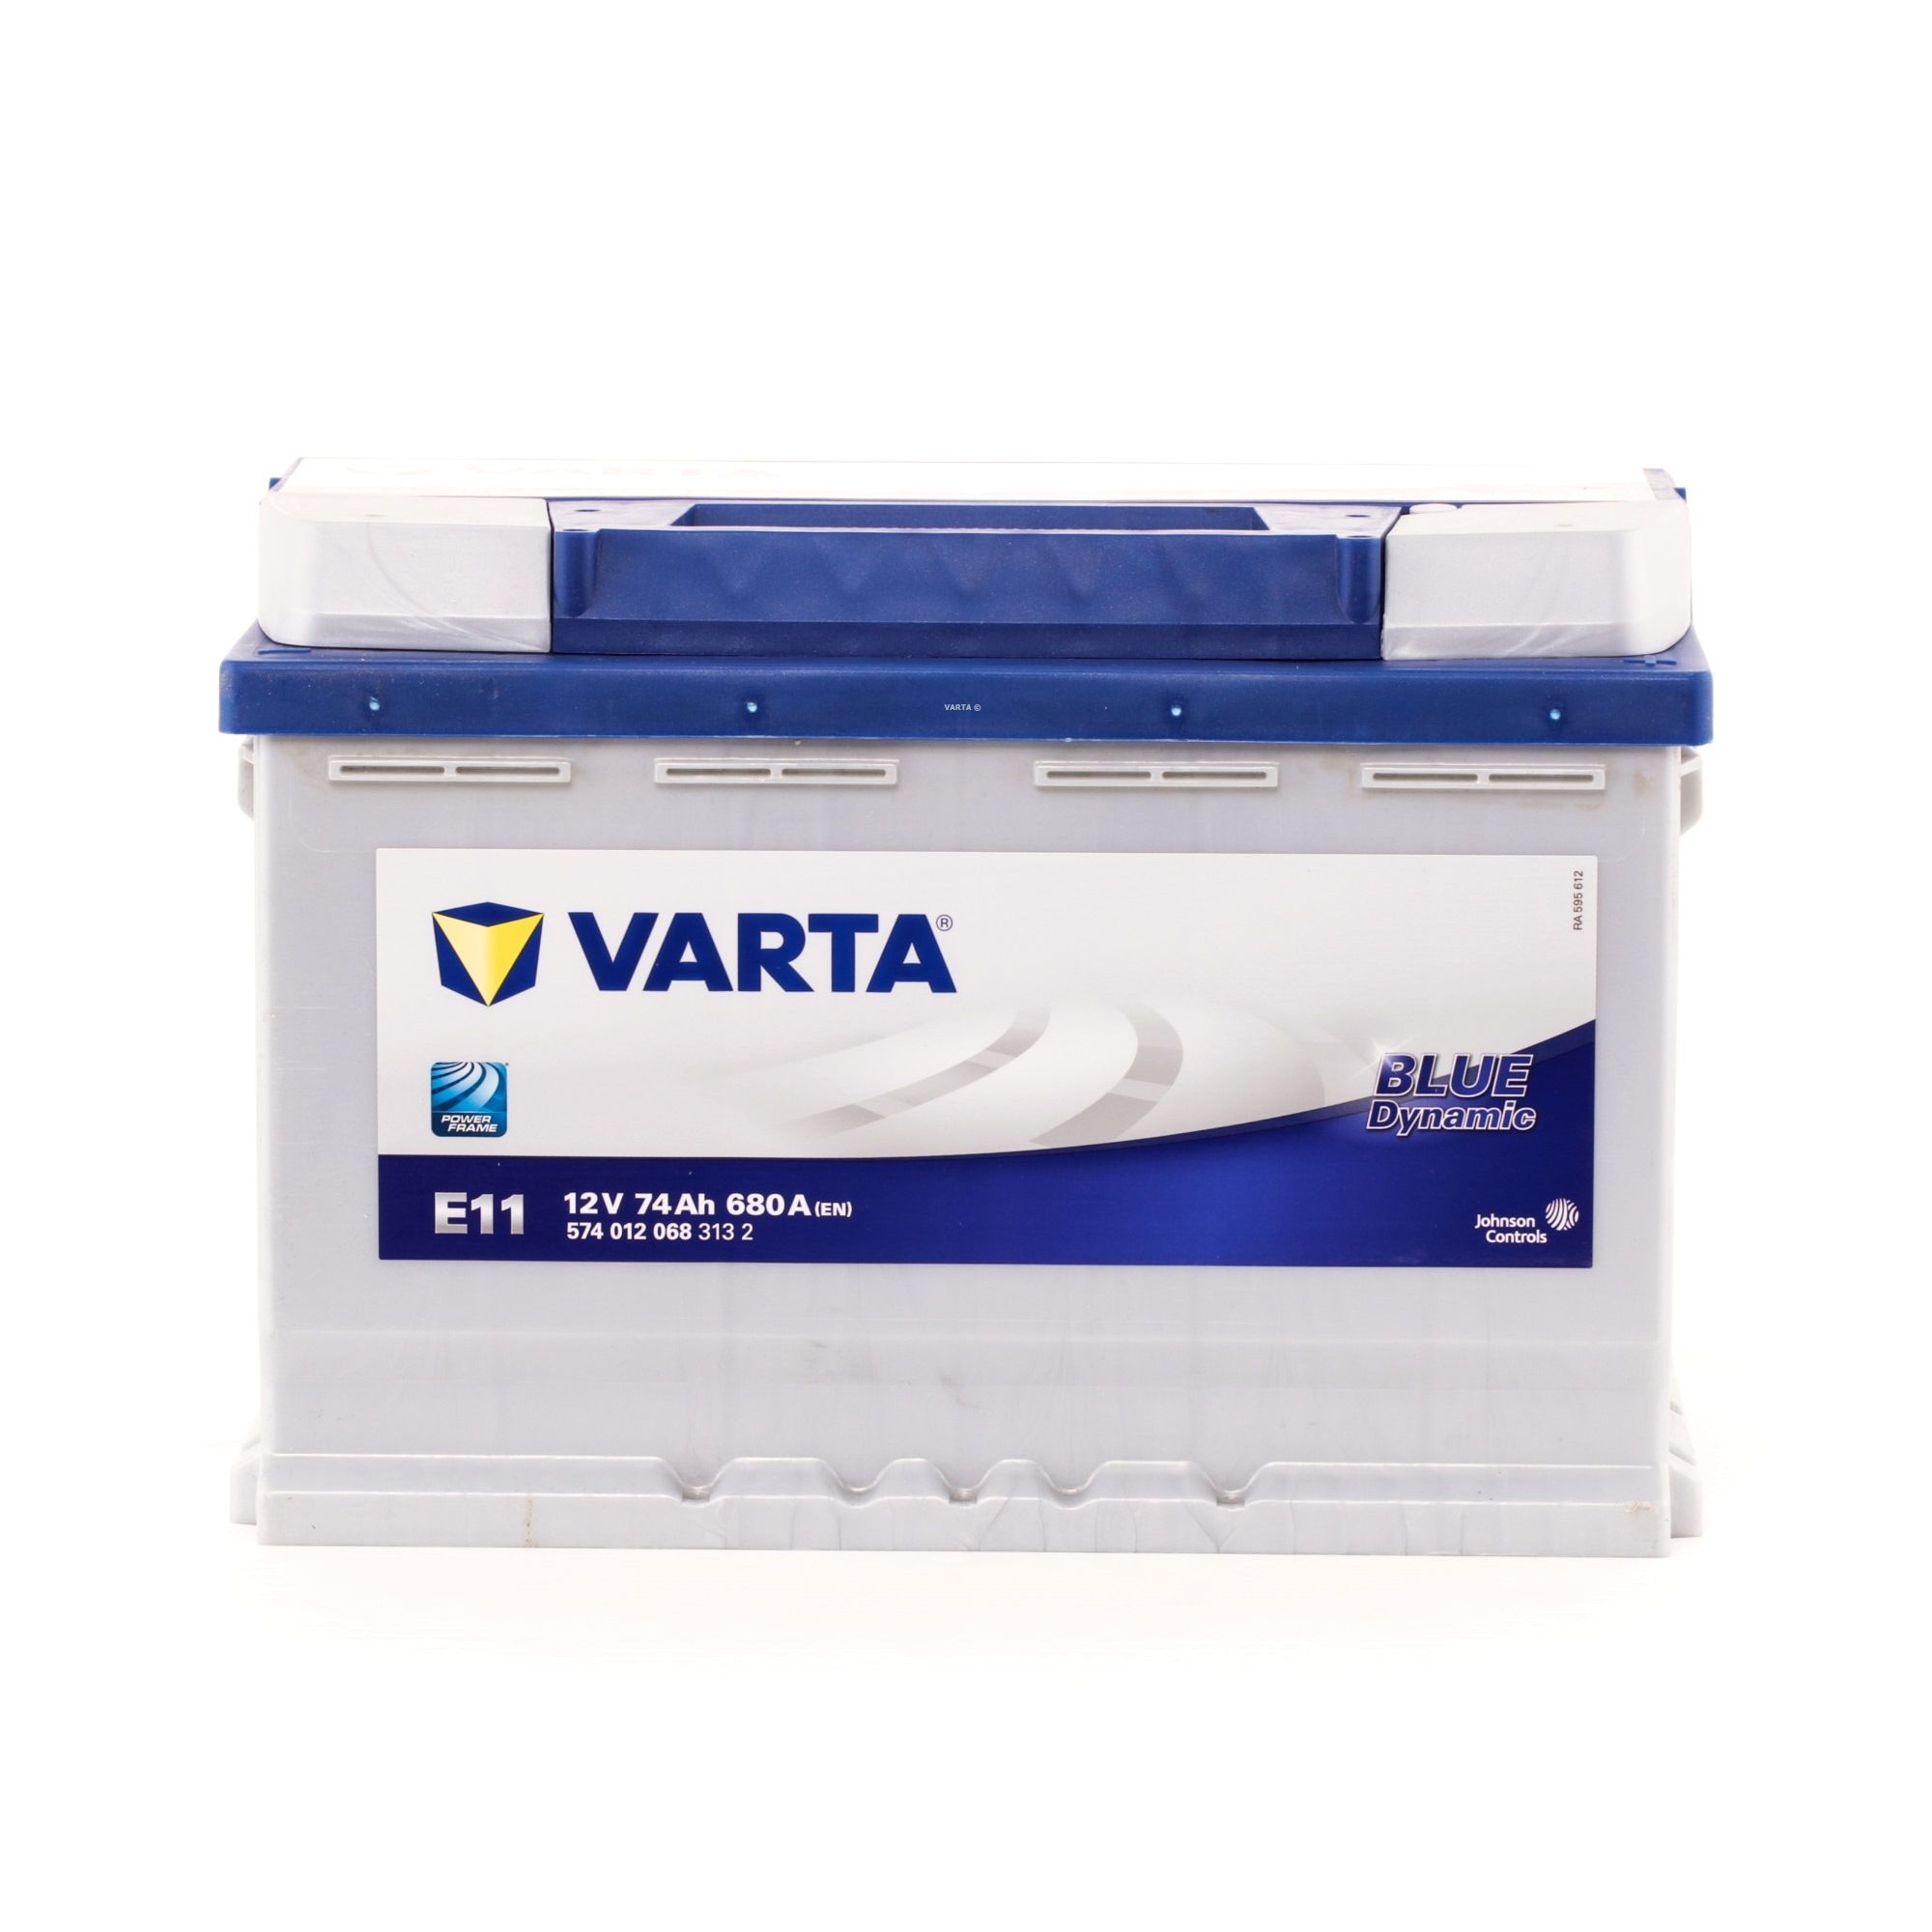 VARTA BLUE dynamic, E11 5740120683132 Batterie 12V 74Ah 680A B13 Bleiakkumulator